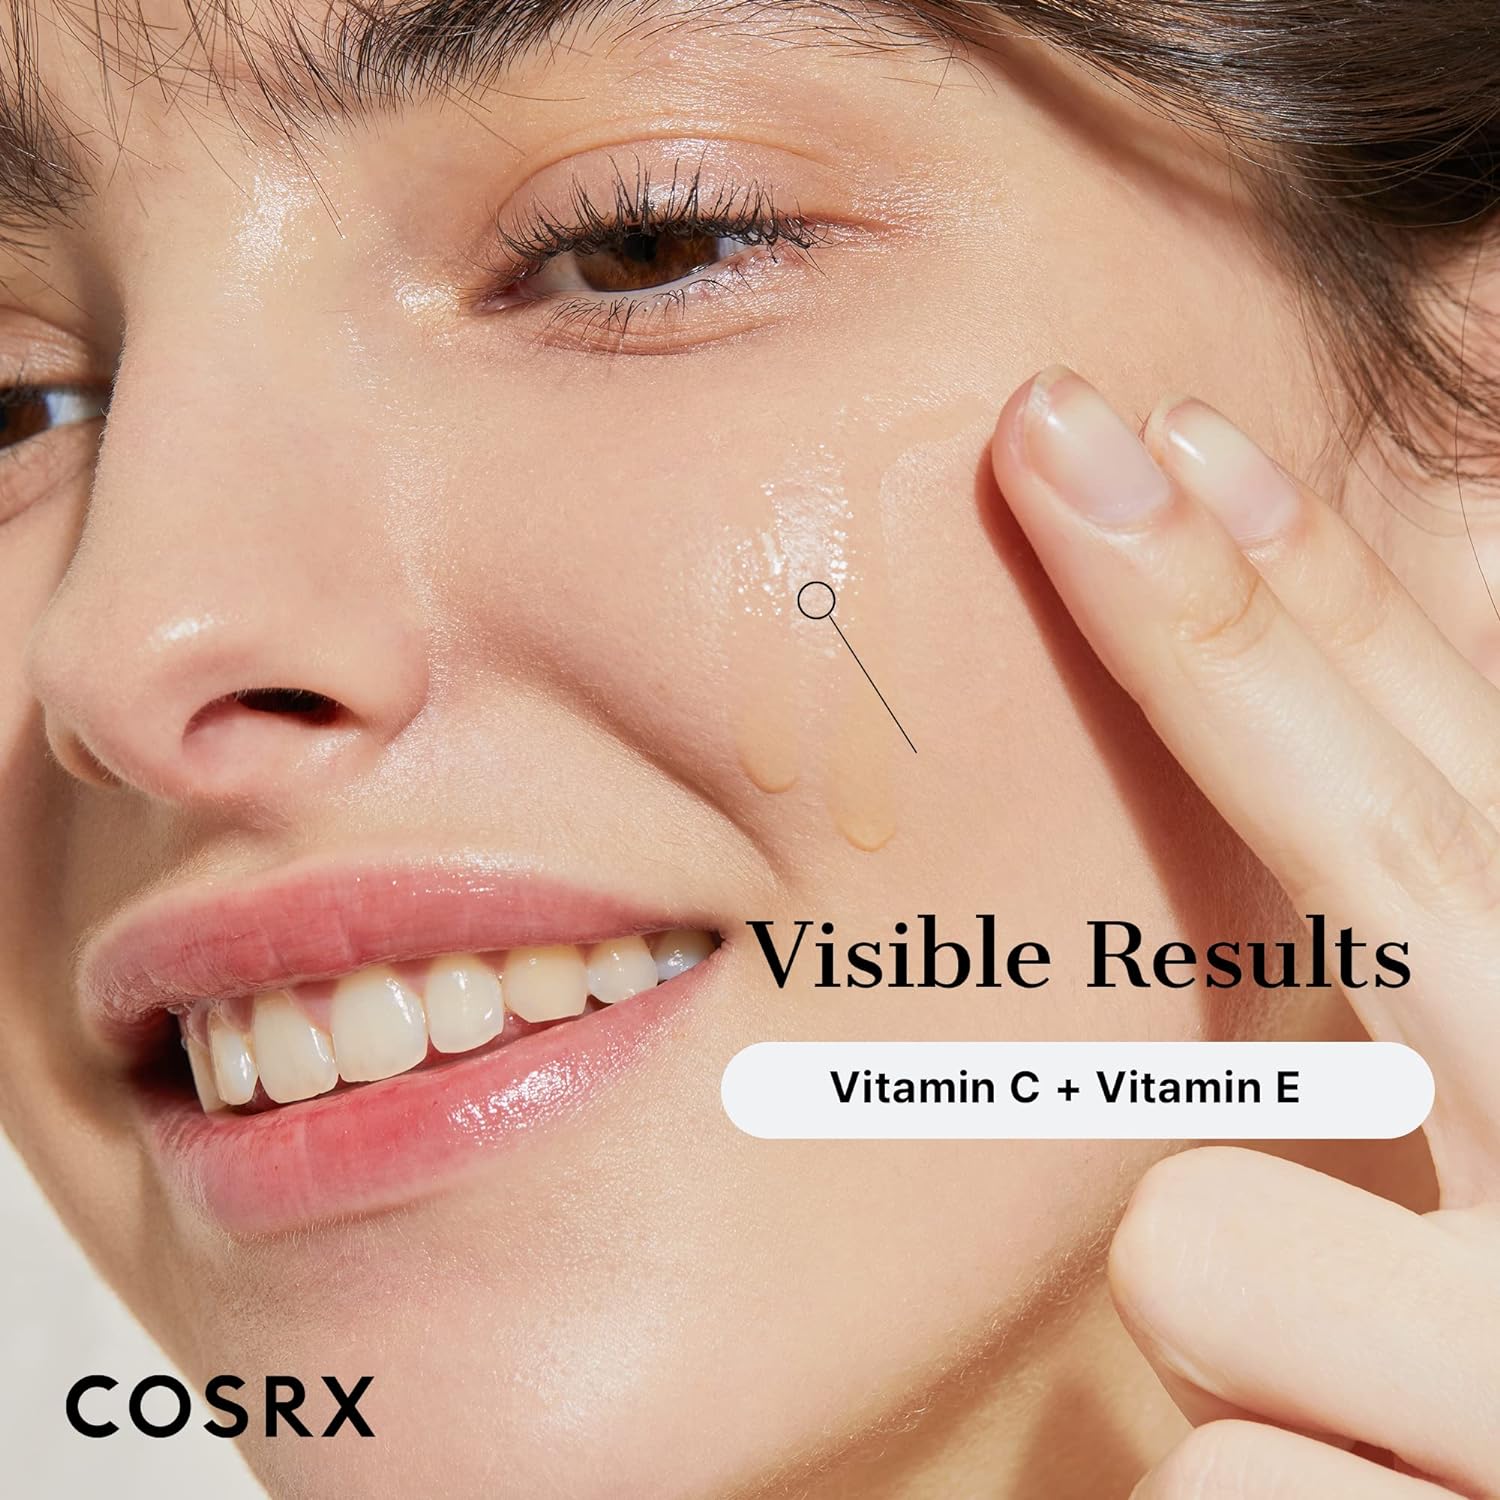 Cosrx Pure Vitamin C Serum With Vitamin E  Hyaluronic Acid, Brightening  Hydrating Facial Serum For Fine Lines, Uneven Skin Tone  Dull Skin, 0.7Oz/20G, Korean Skincare (Vitamin C 23% Serum)